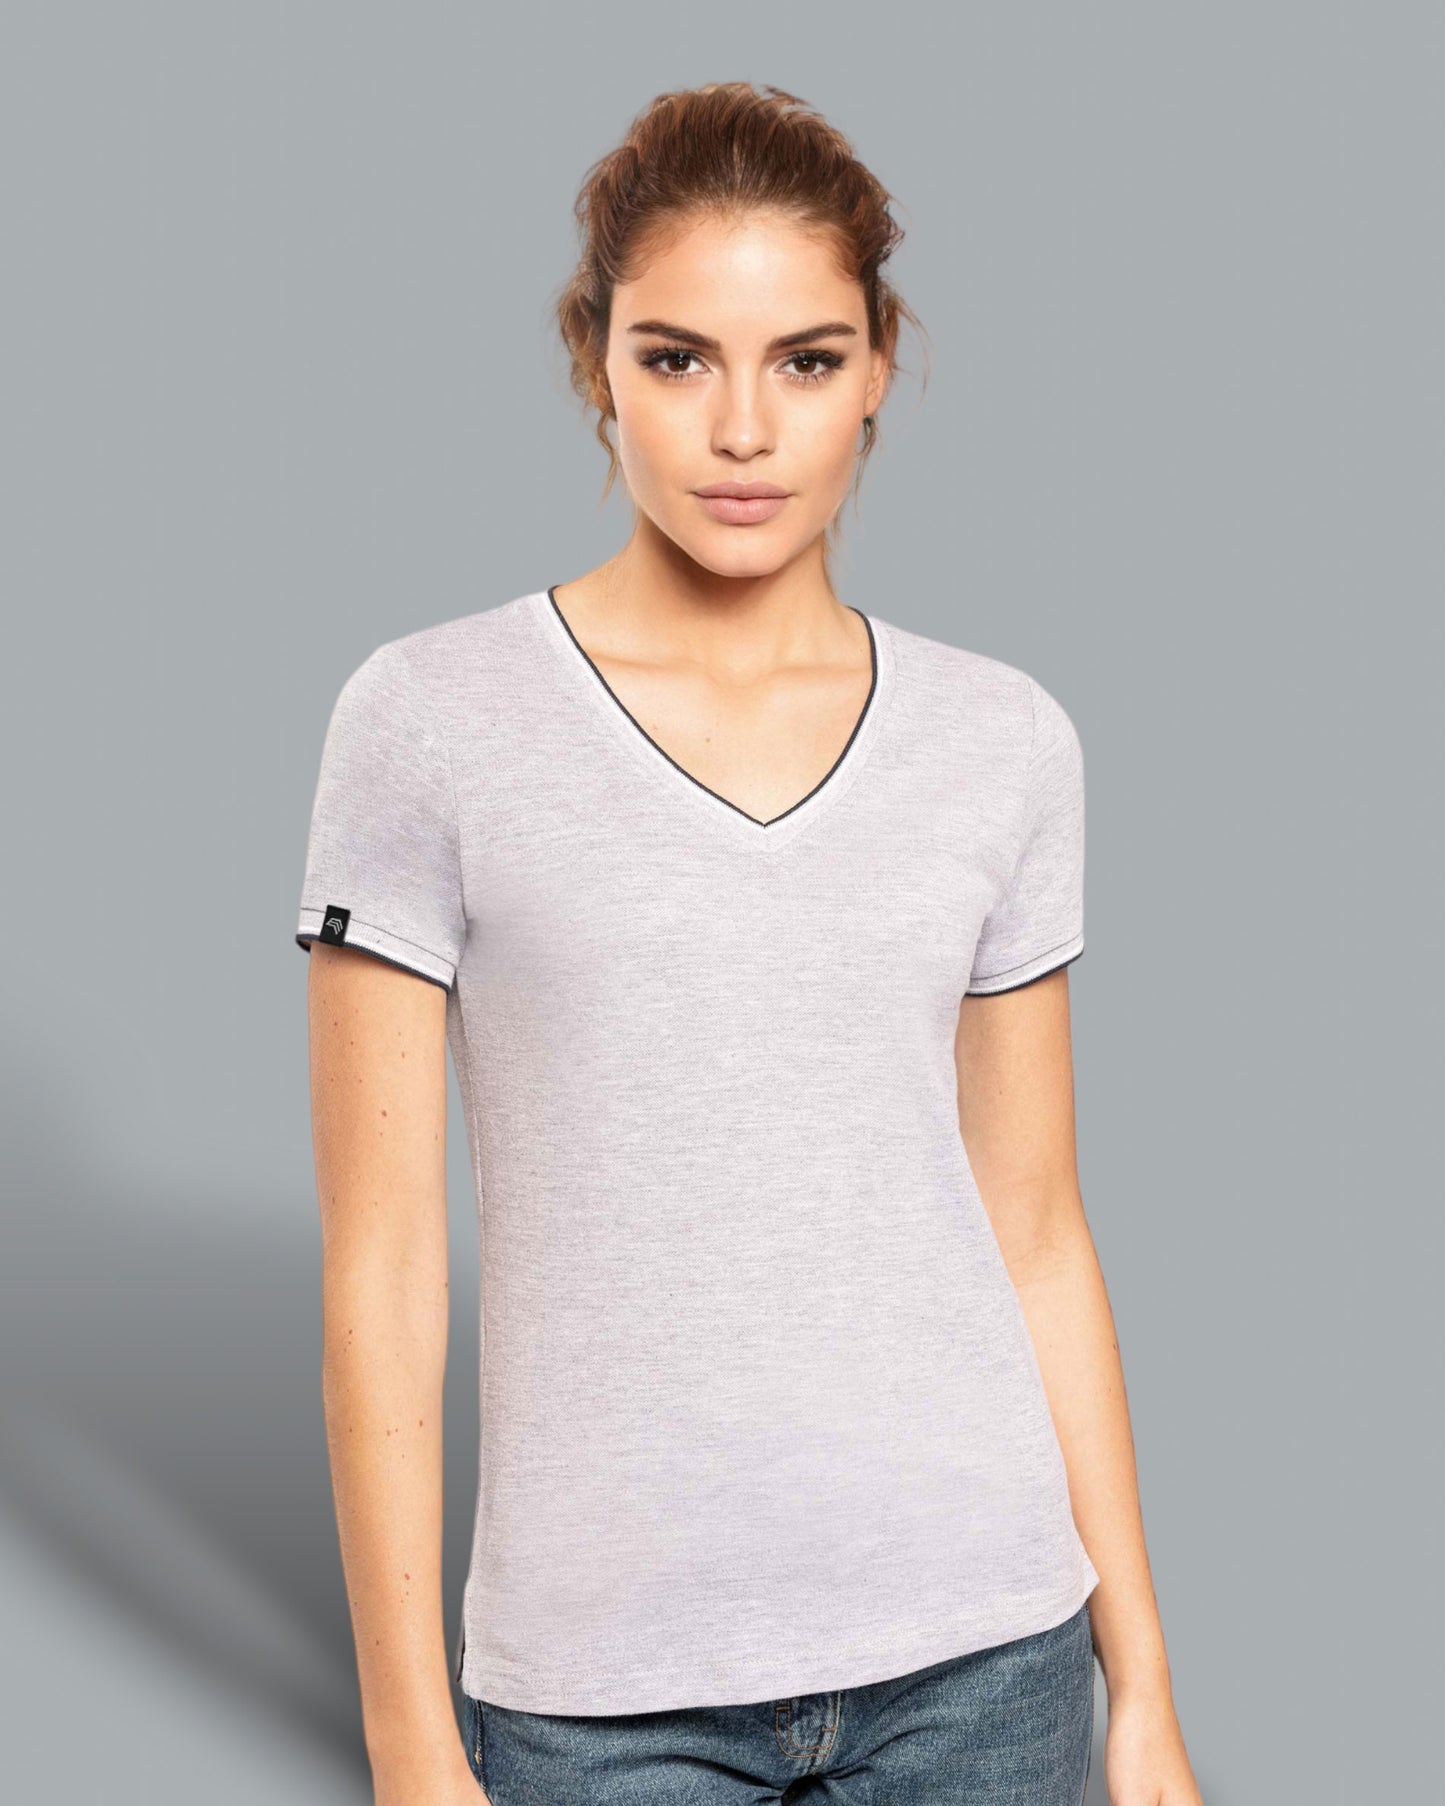 KRB K394 ― Damen Piqué-Trikot V-Neck T-Shirt - Melange Grau / Blau / Weiß